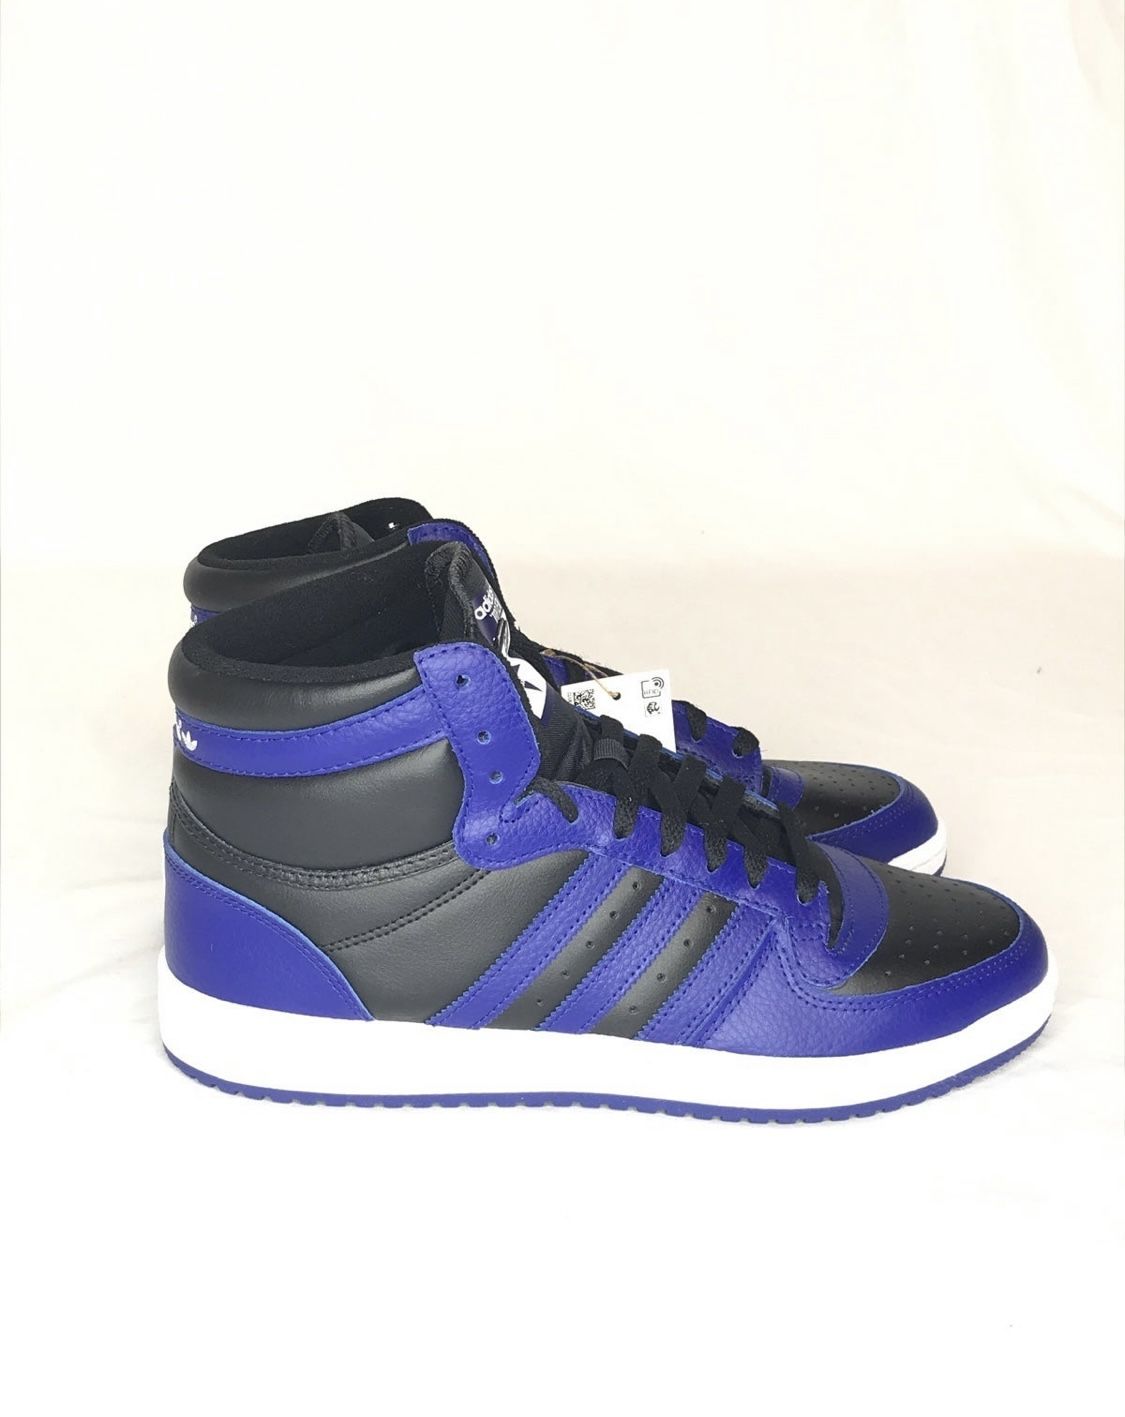 Adidas TOP TEN RB Black/Legacy Indigo Blue/White GX0755 Men's Shoes Size 10